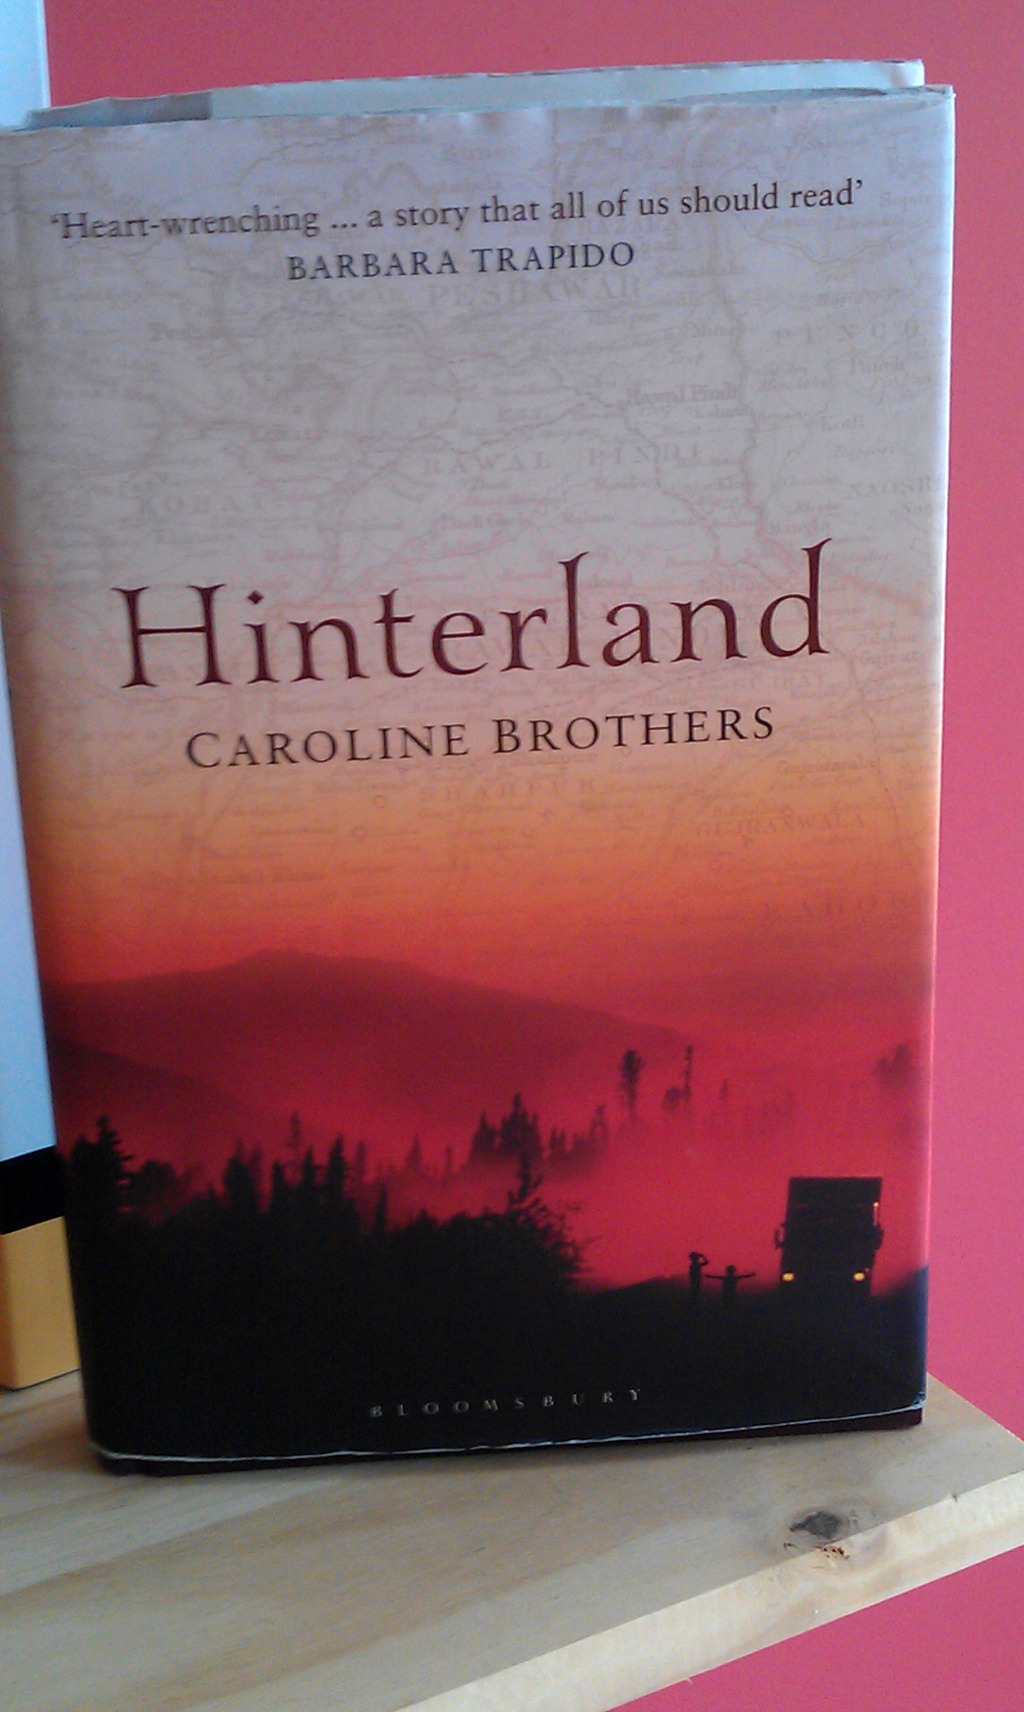 Hinterland by Caroline Brothers